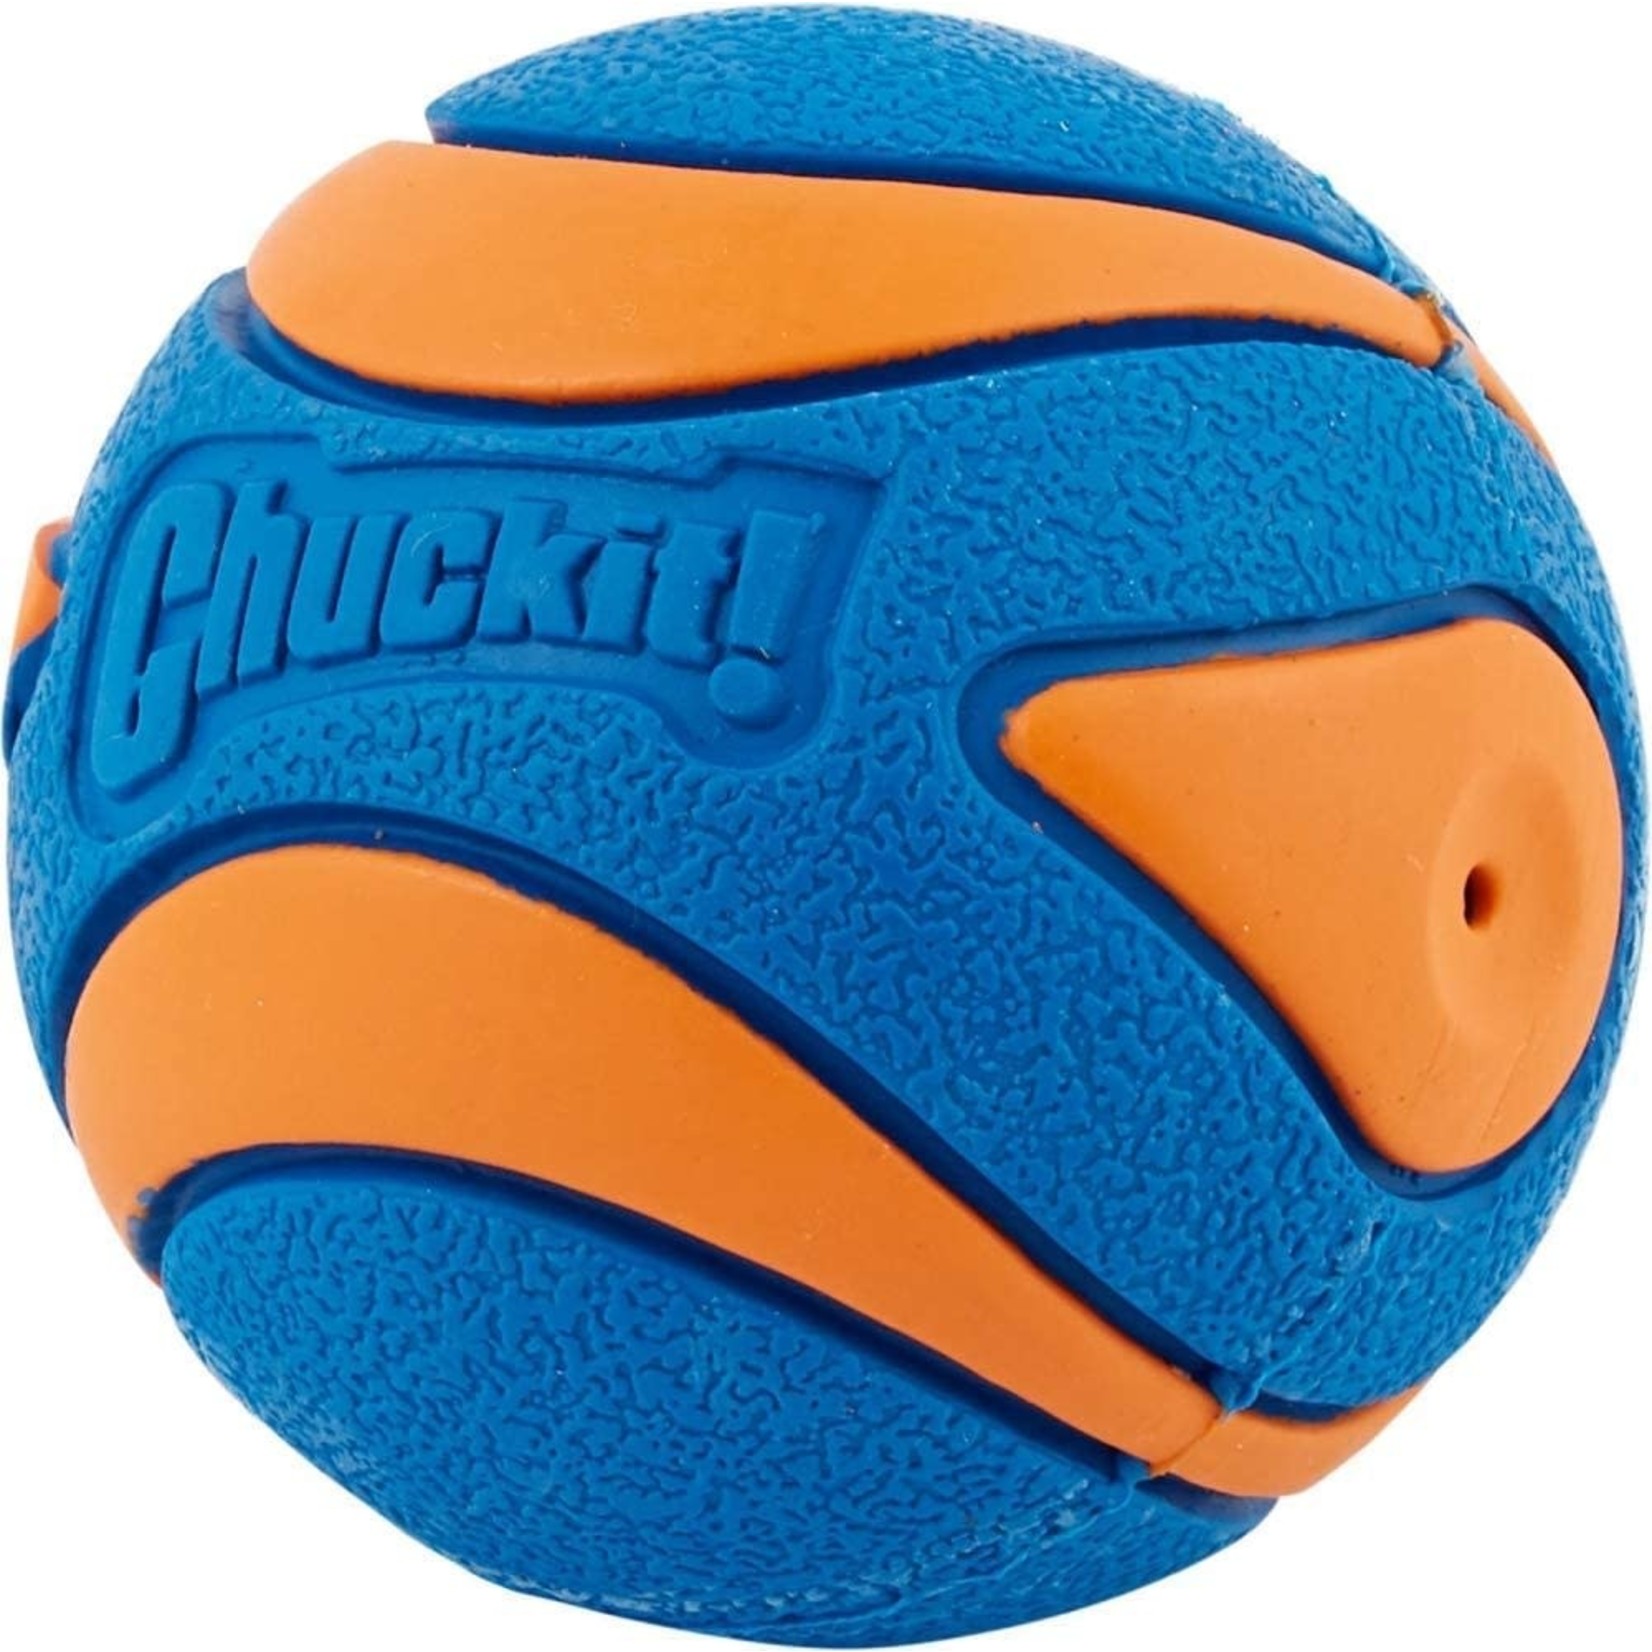 Chuckit Chuckit! Ultra Squeaker Ball 1Pk Dog Toy